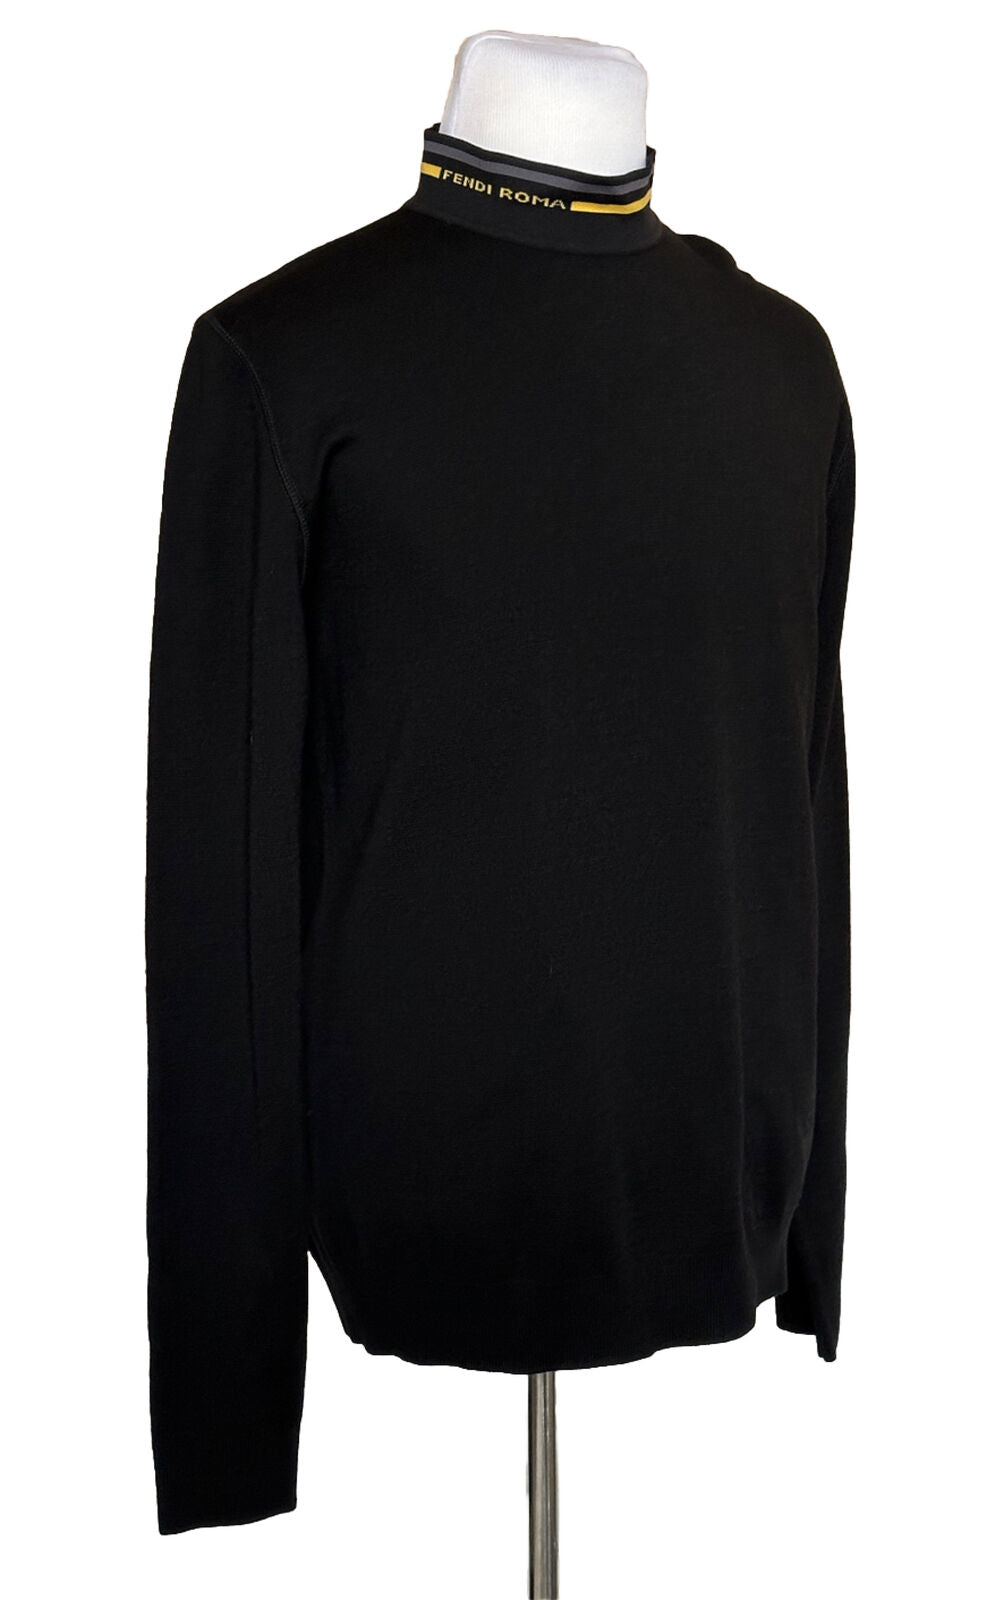 NWT $850 Fendi Wool Knit Sweater Black 58 Euro FZY464 Made in Italy